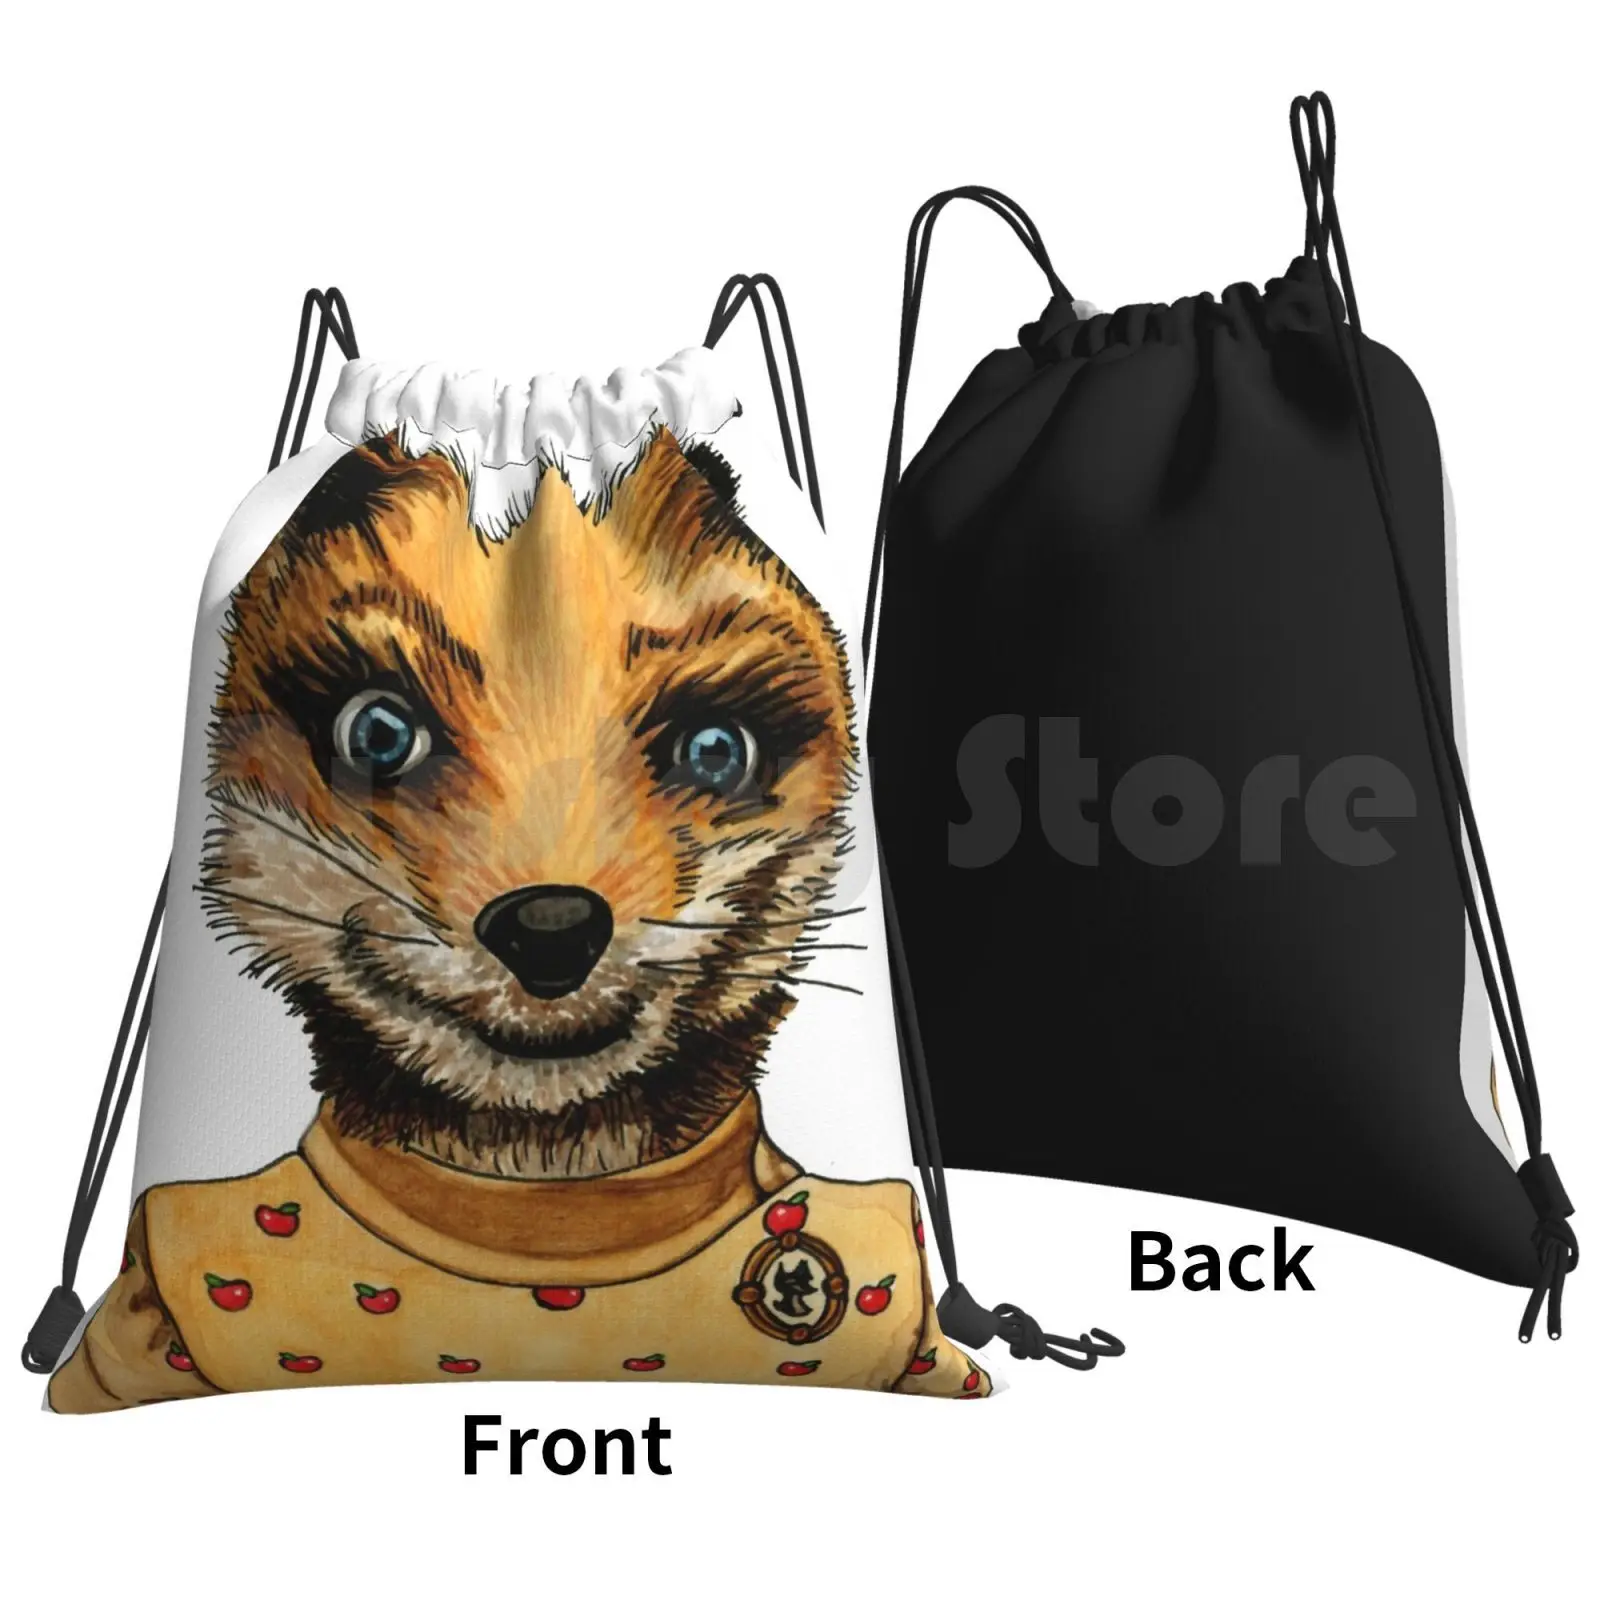 Раница Mrs. Fox, чанти дантела прозорци, спортна чанта, водонепроницаемое животно под формата на лисици, фантастичният мистър Фокс